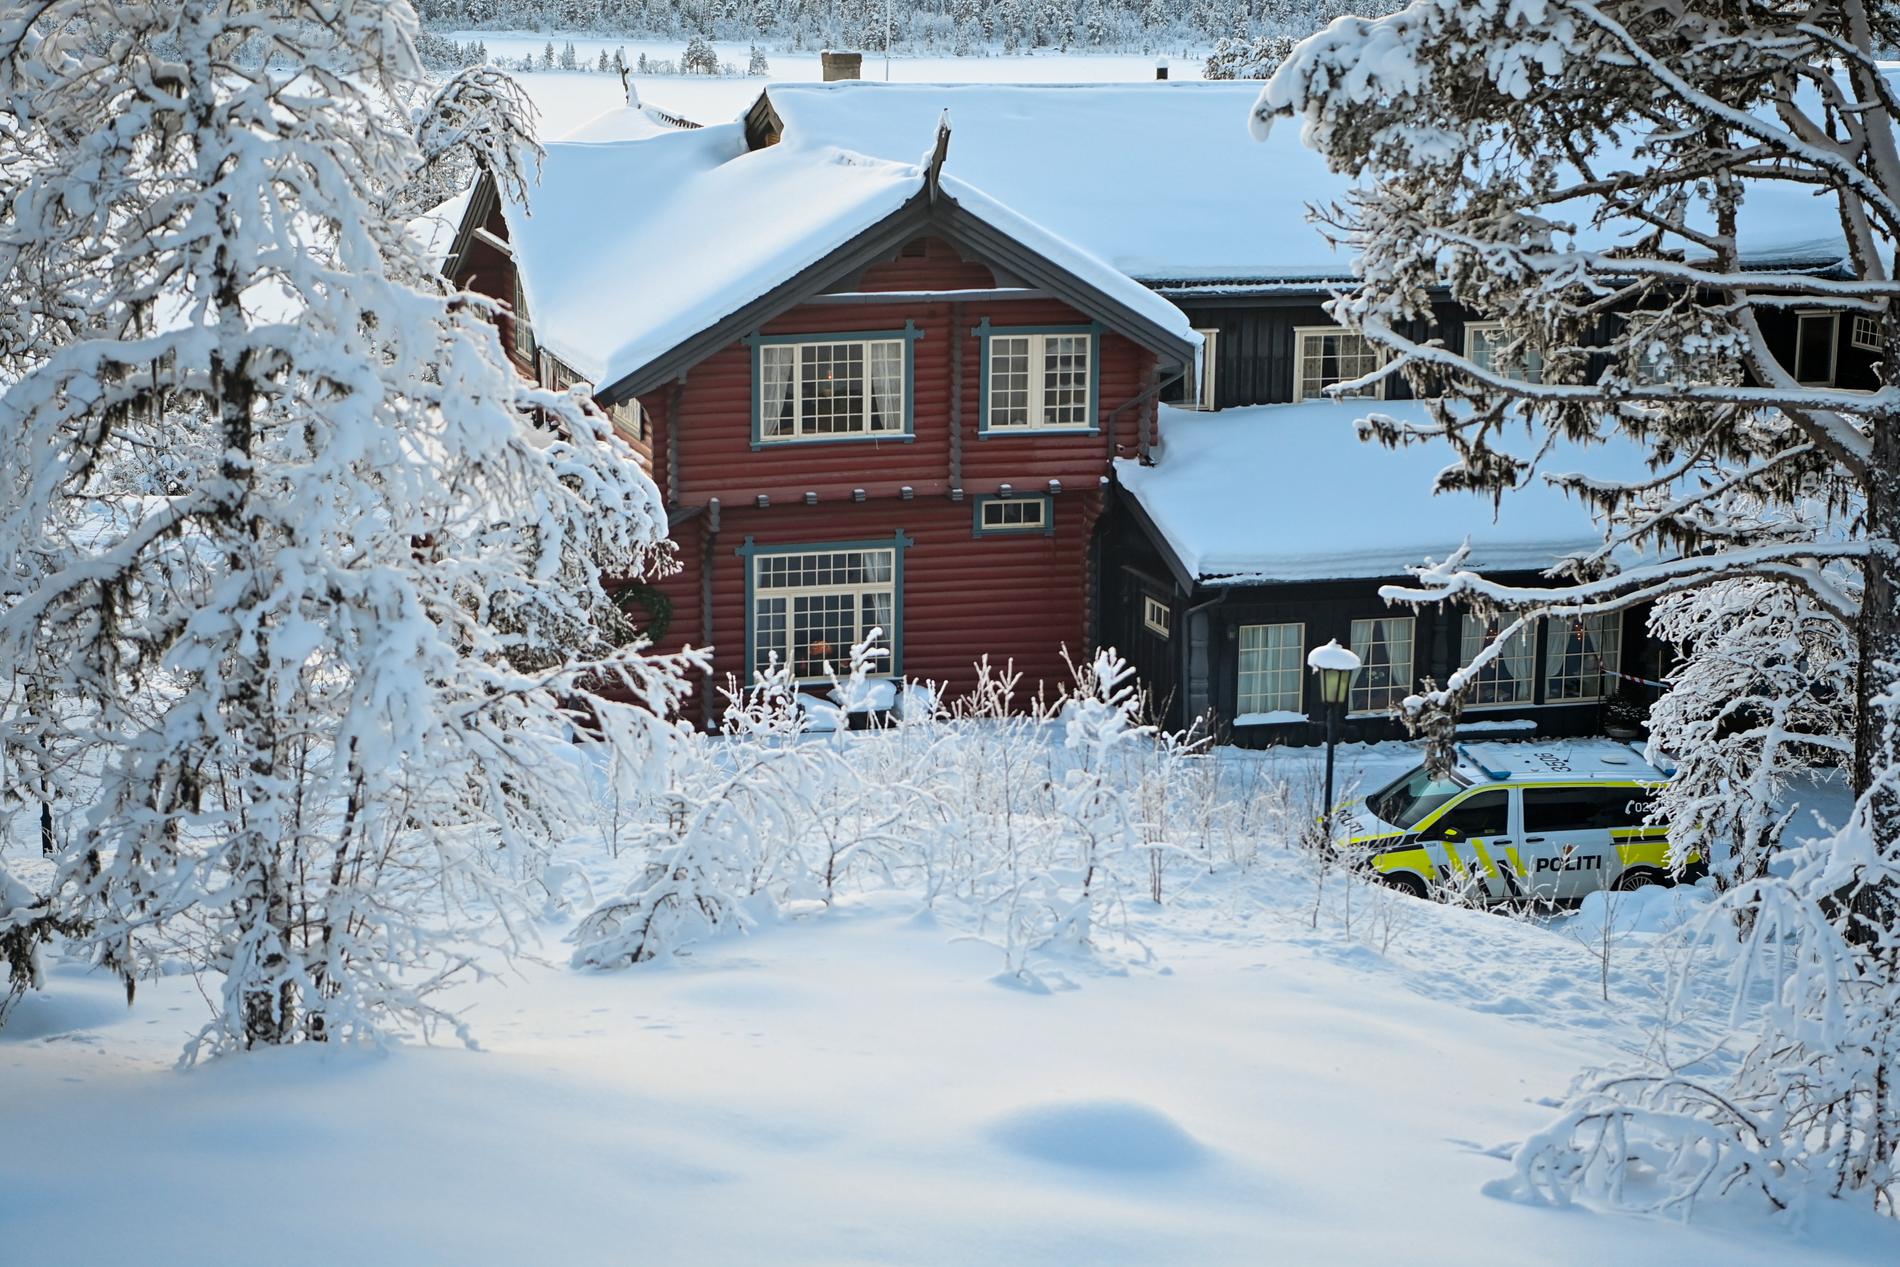 Murder in a hotel in Gudbrandsdalen: A woman was murdered in her own room